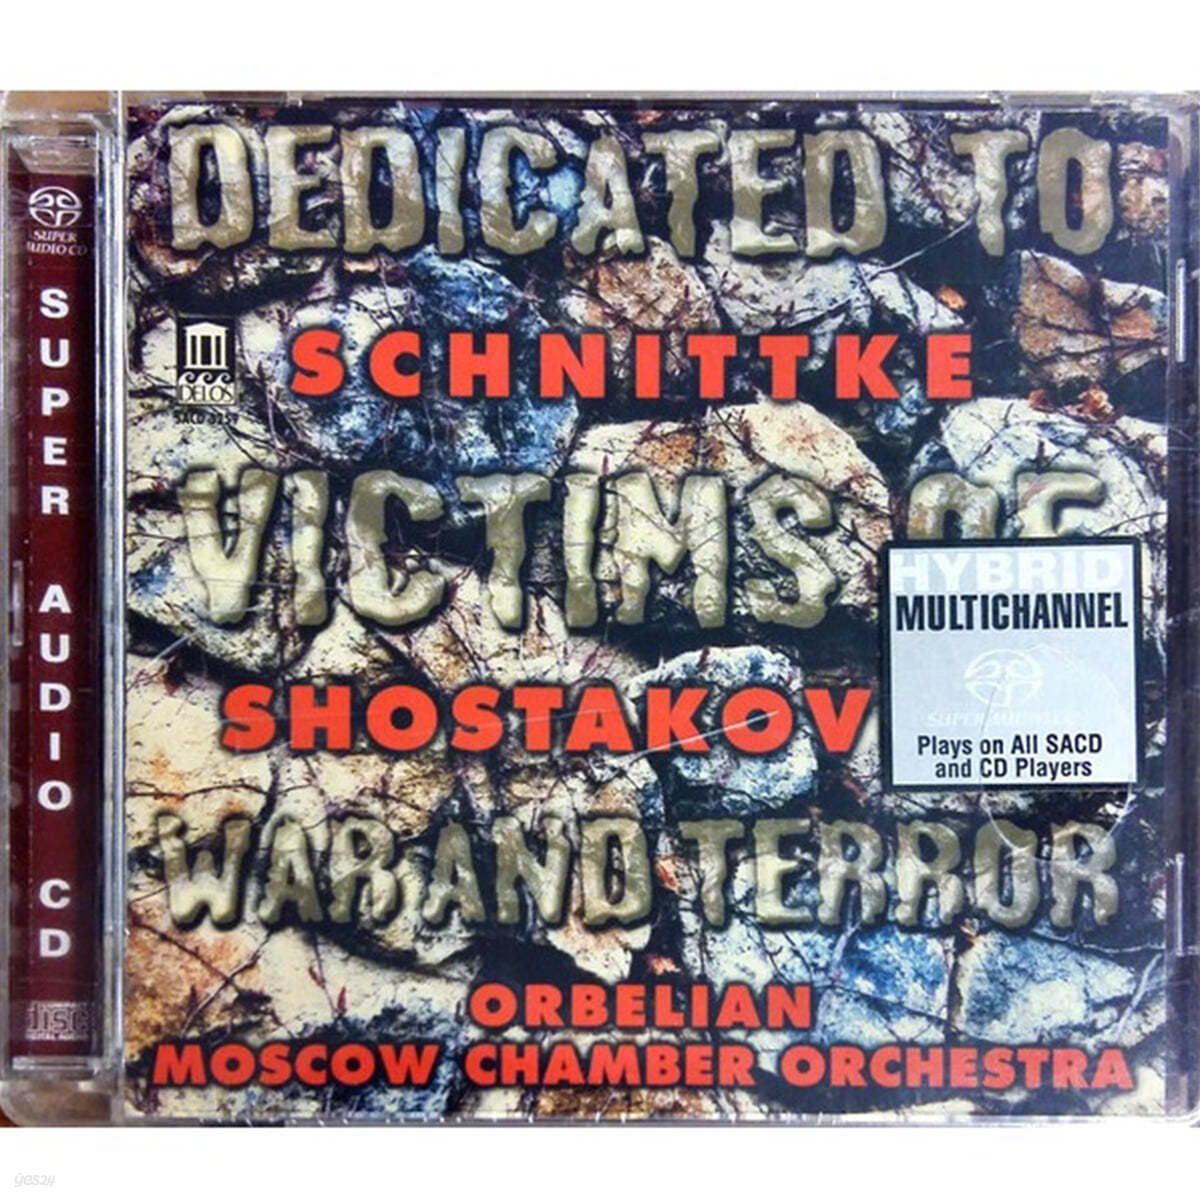 Constantine Orbelian 쇼스타코비치 / 슈니트케: 전쟁과 테러 희생자들을 위한 헌신 (Shostakovich / Schnittke : Dedicated To Victims Of War And Terror) 